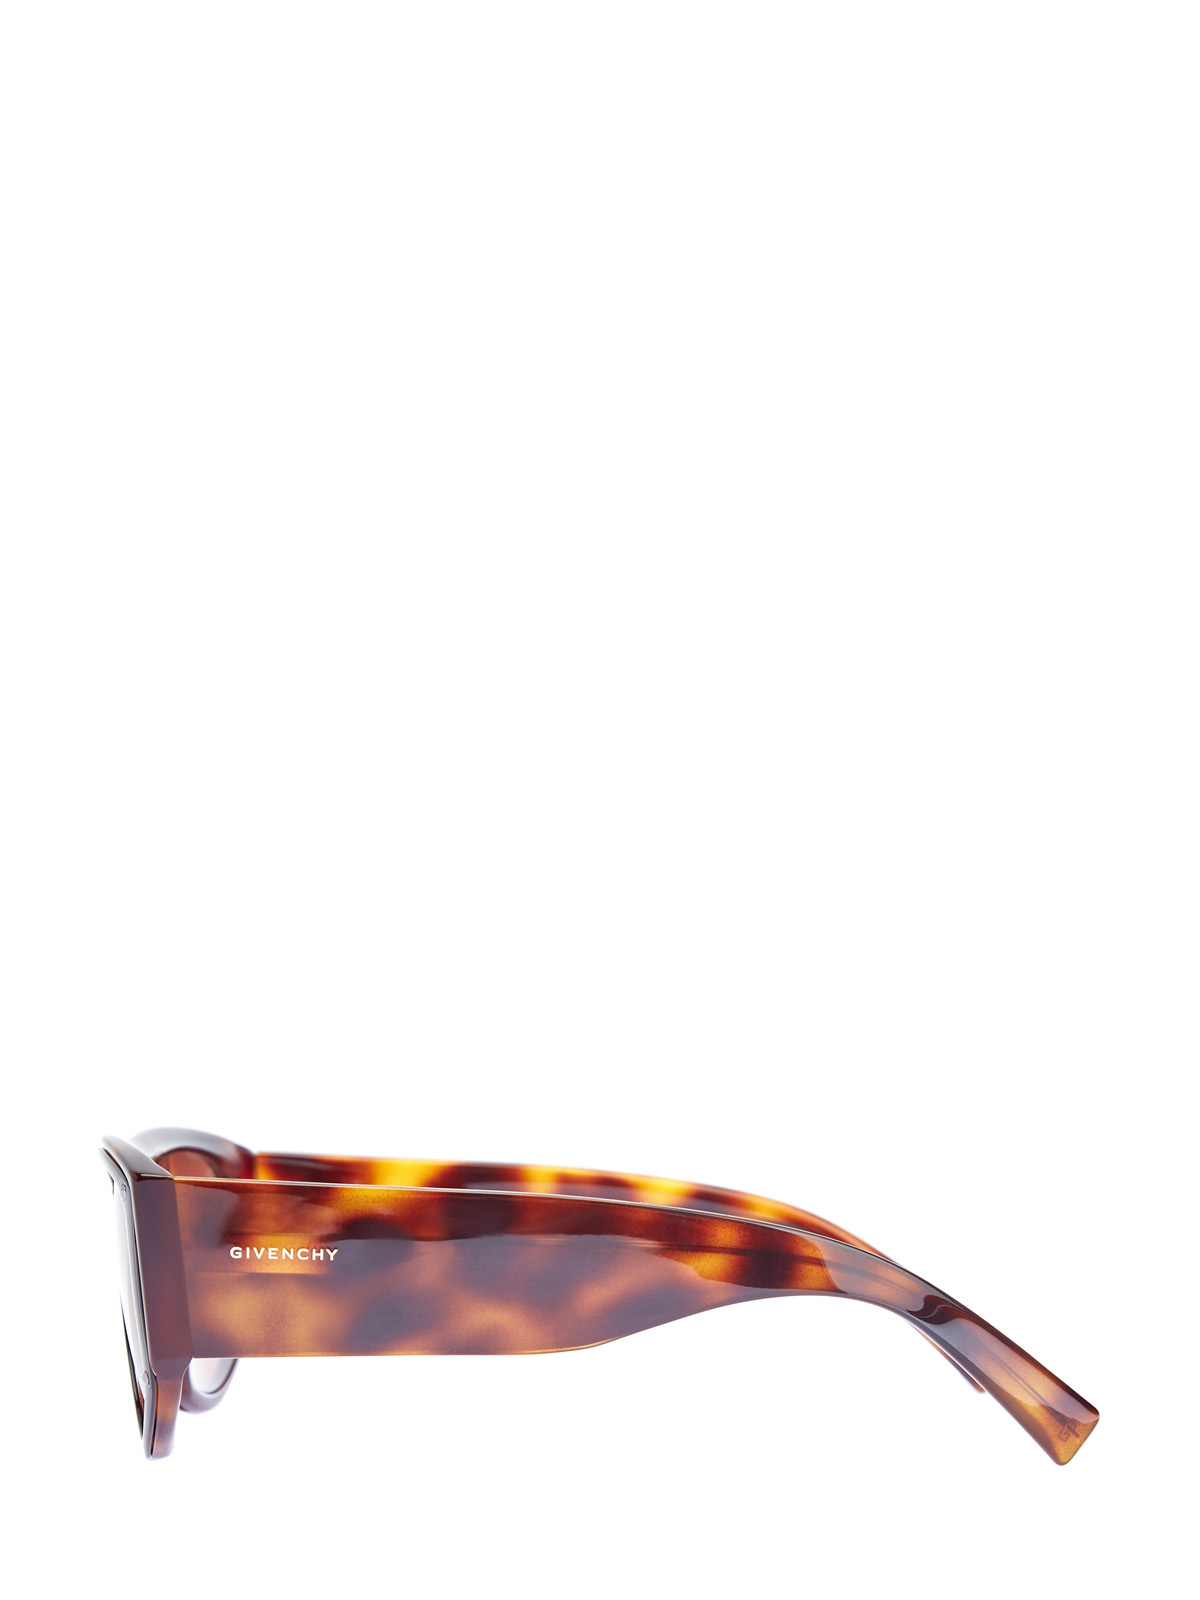 Очки с широкими дужками из легкого черепахового ацетата GIVENCHY (sunglasses), цвет коричневый, размер S;M;L - фото 3